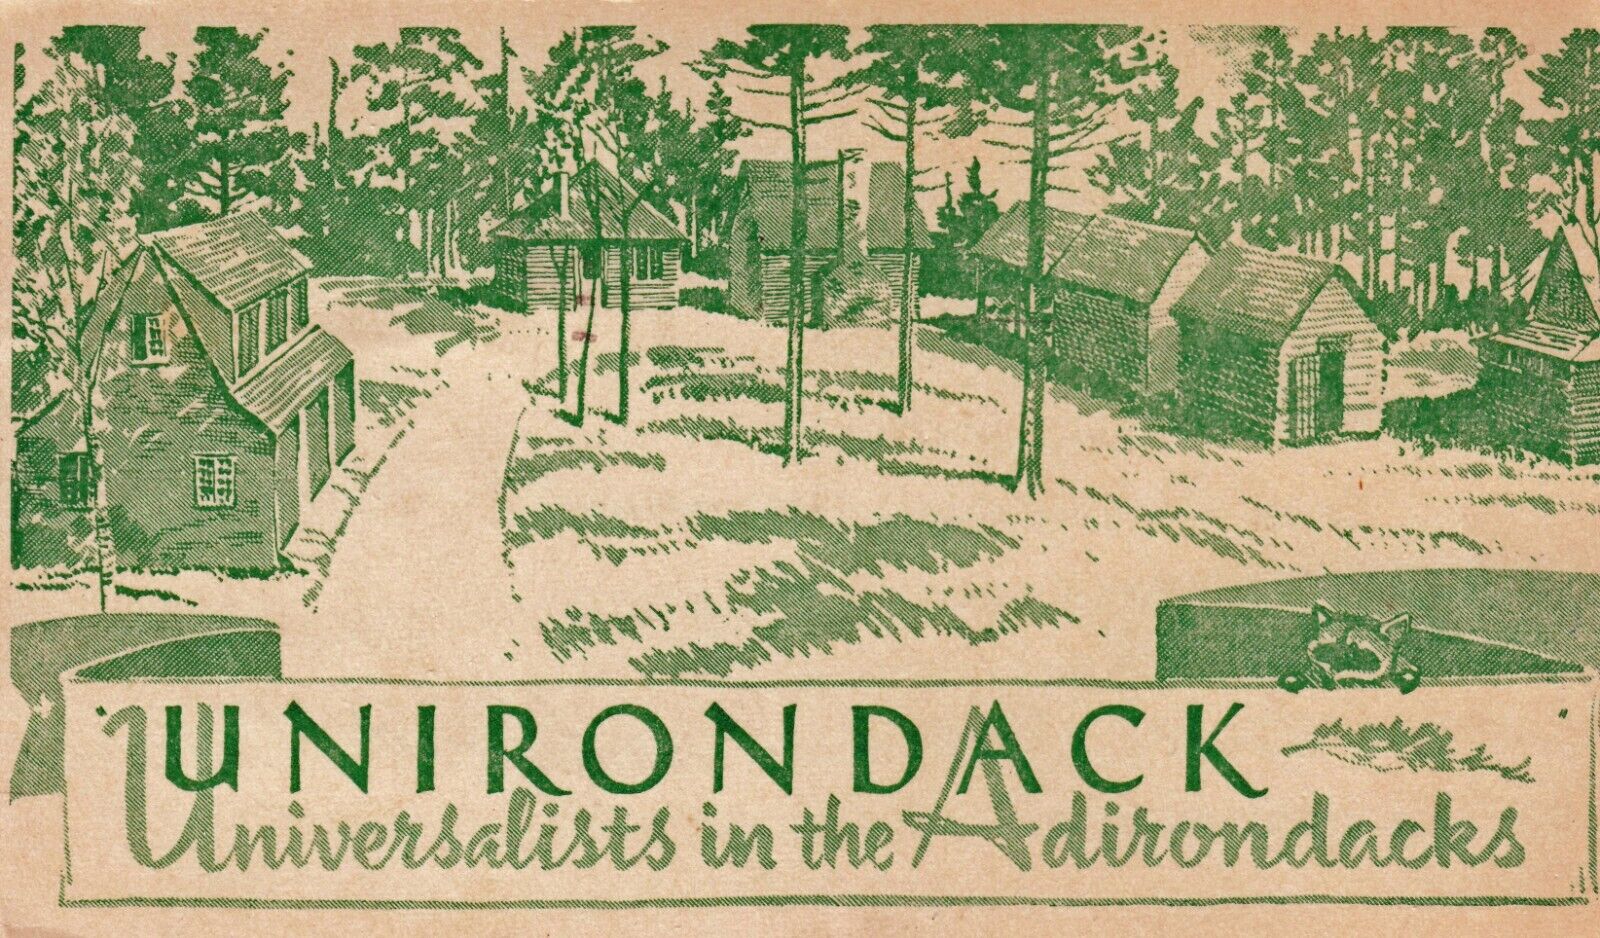 LOWVILLE NEW YORK ~ Unirondack Camp - Universalists in the Adirondacks